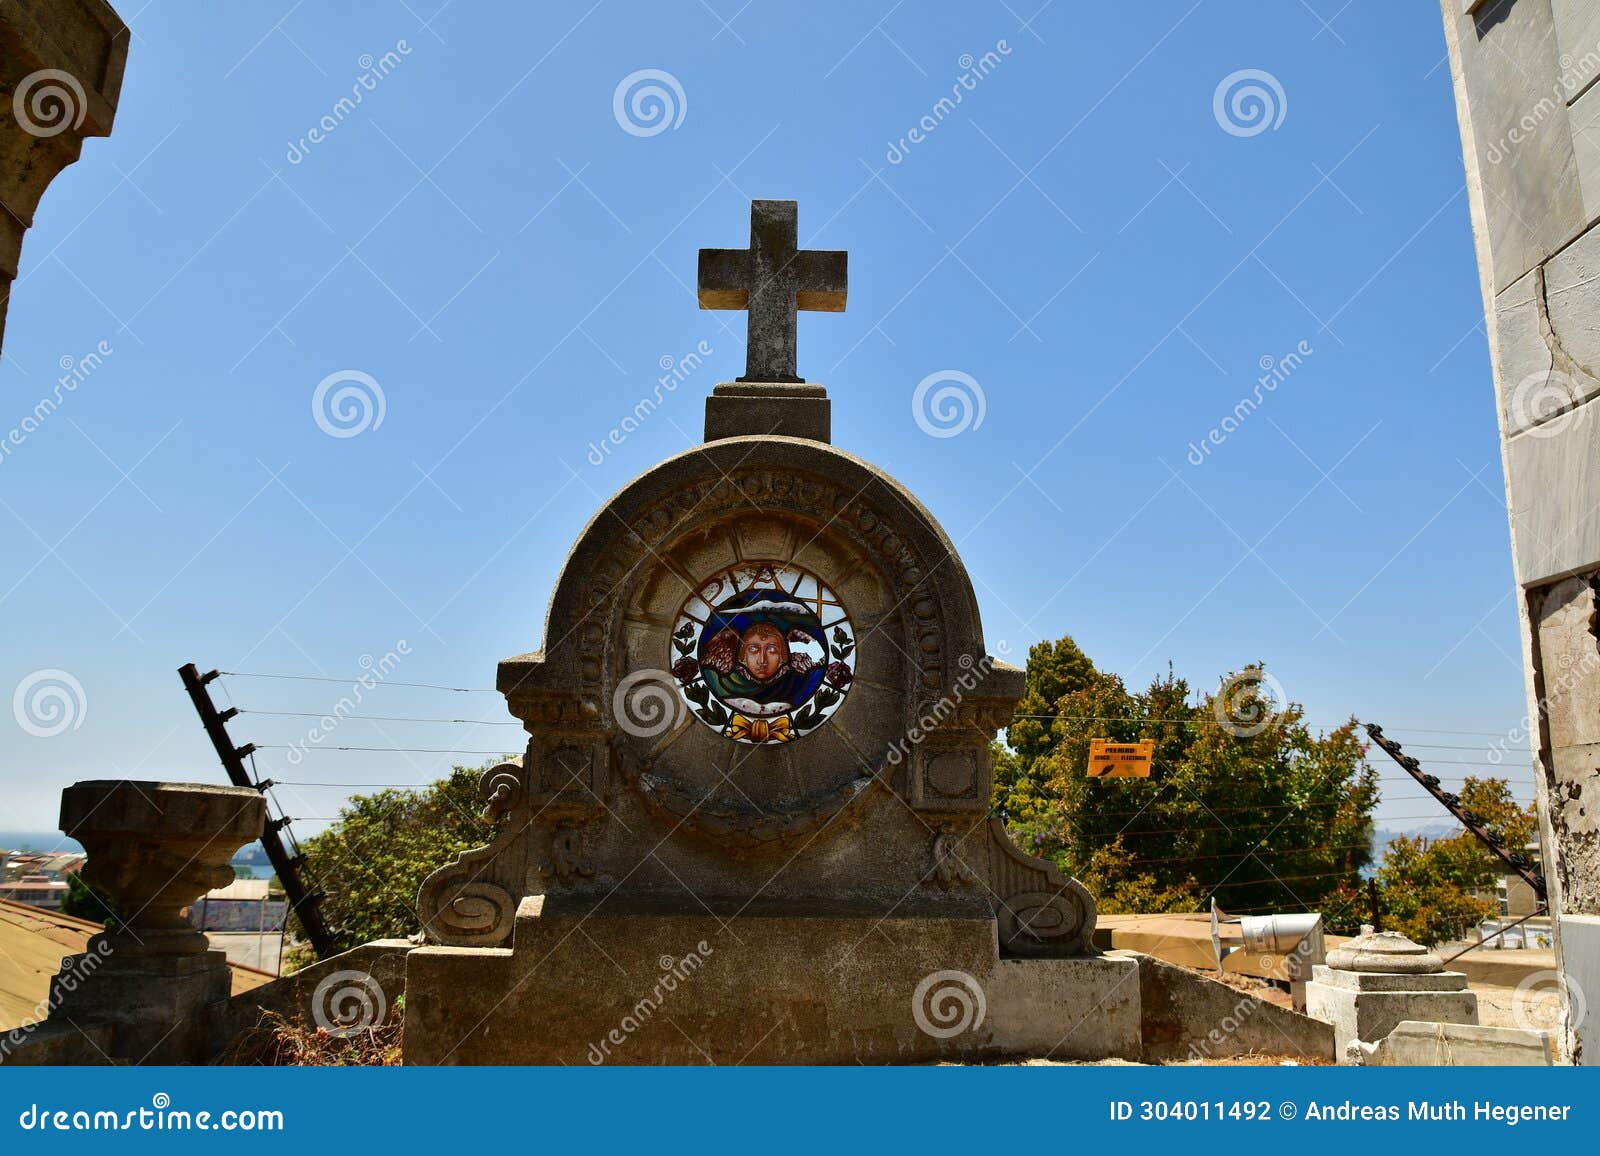 valparaiso cementerio no2 chile south america cemetery